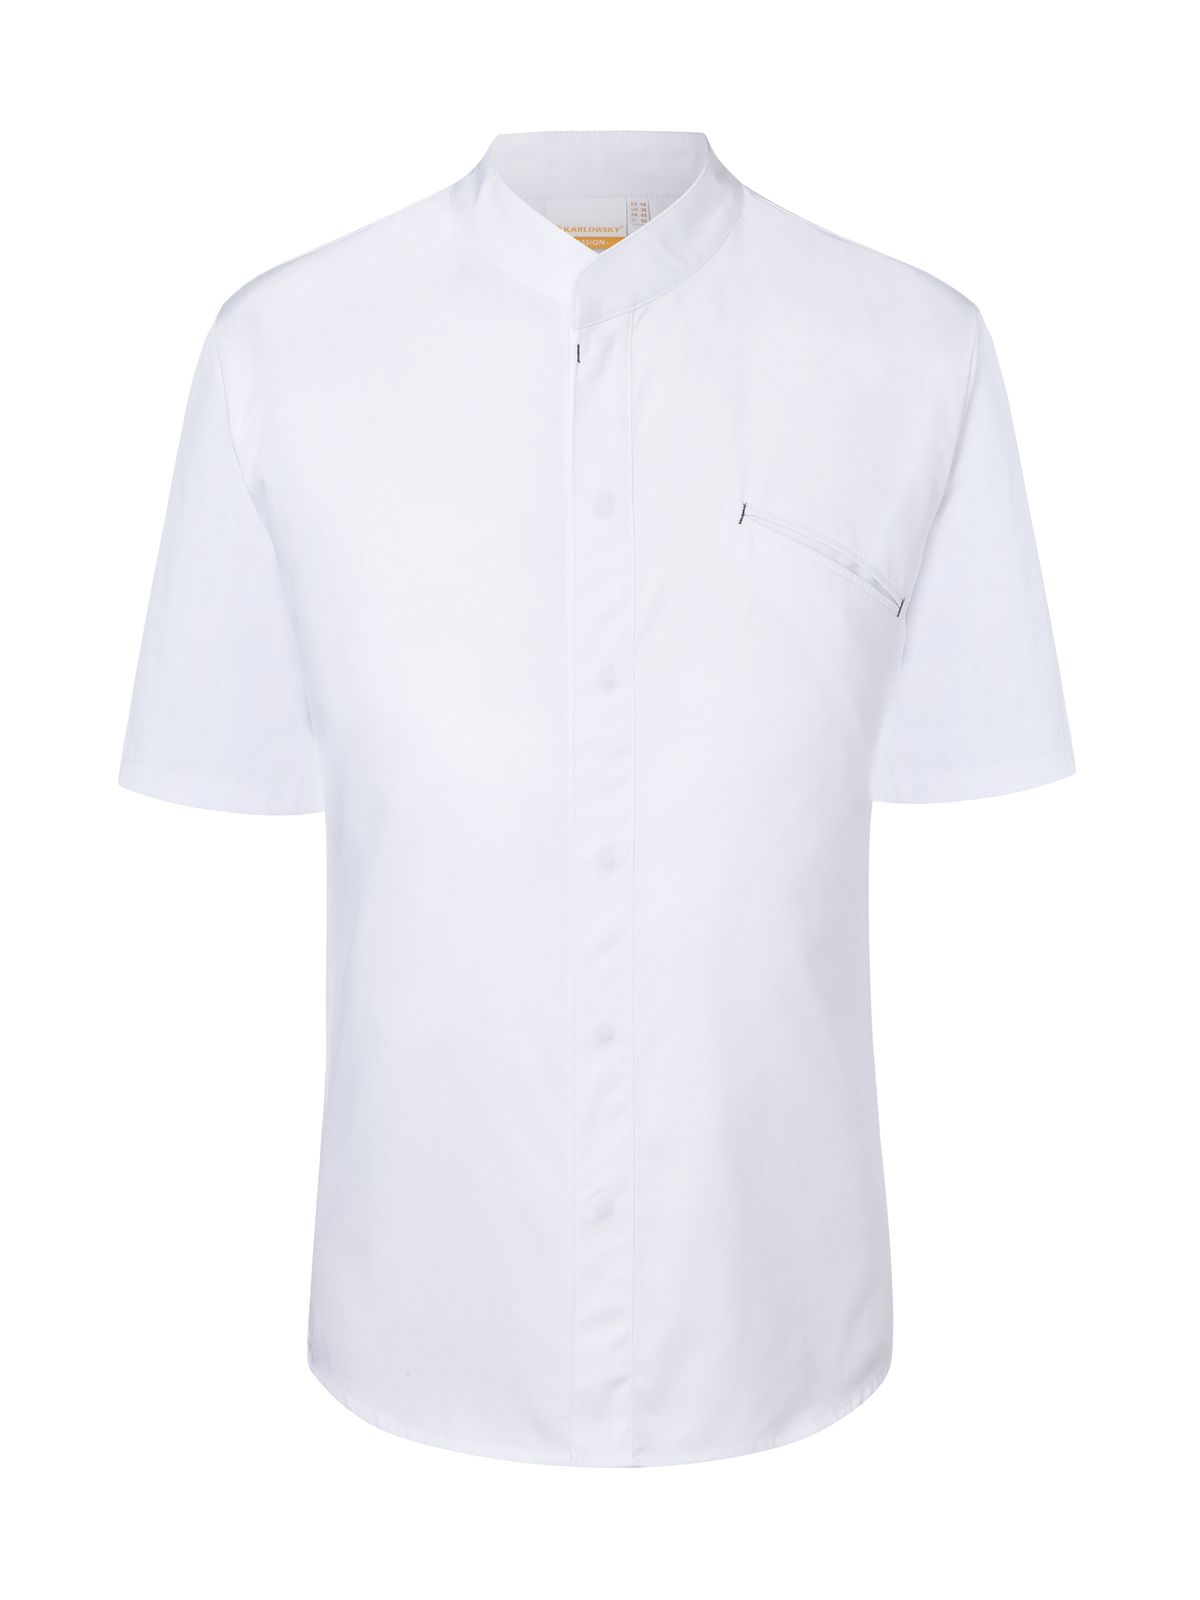 short-sleeve-chef-jacket-modern-touch-white.webp